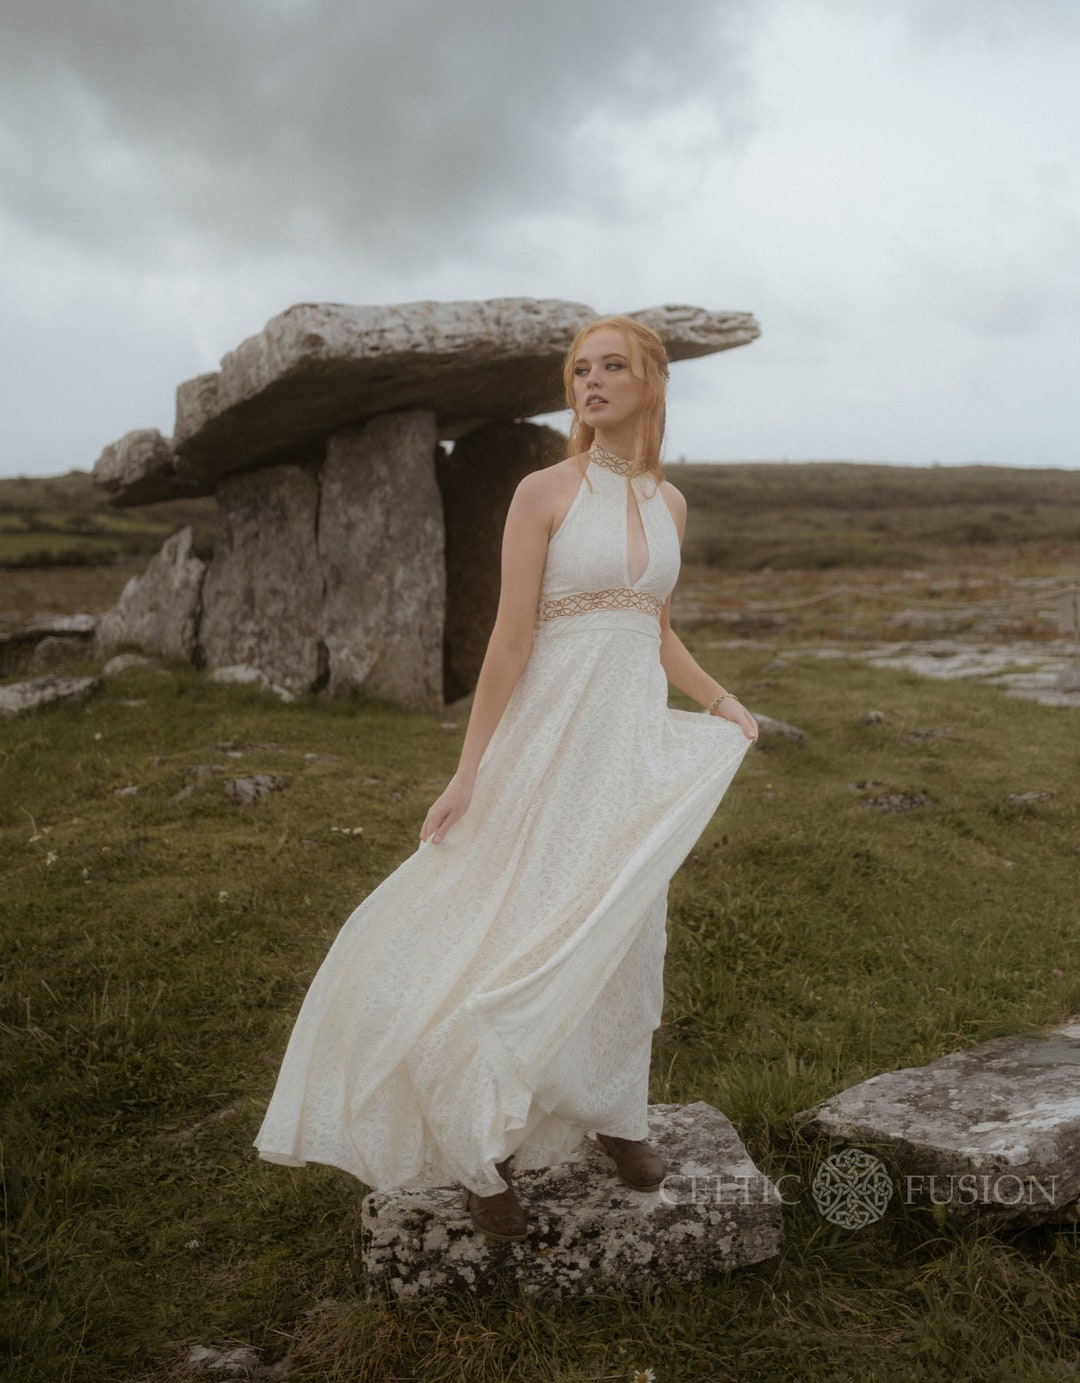 Gorgeous Wedding Dress With Chiffon Celtic Style Sleeves - Etsy | Celtic  wedding dress, Victorian wedding dress, Aline wedding dress